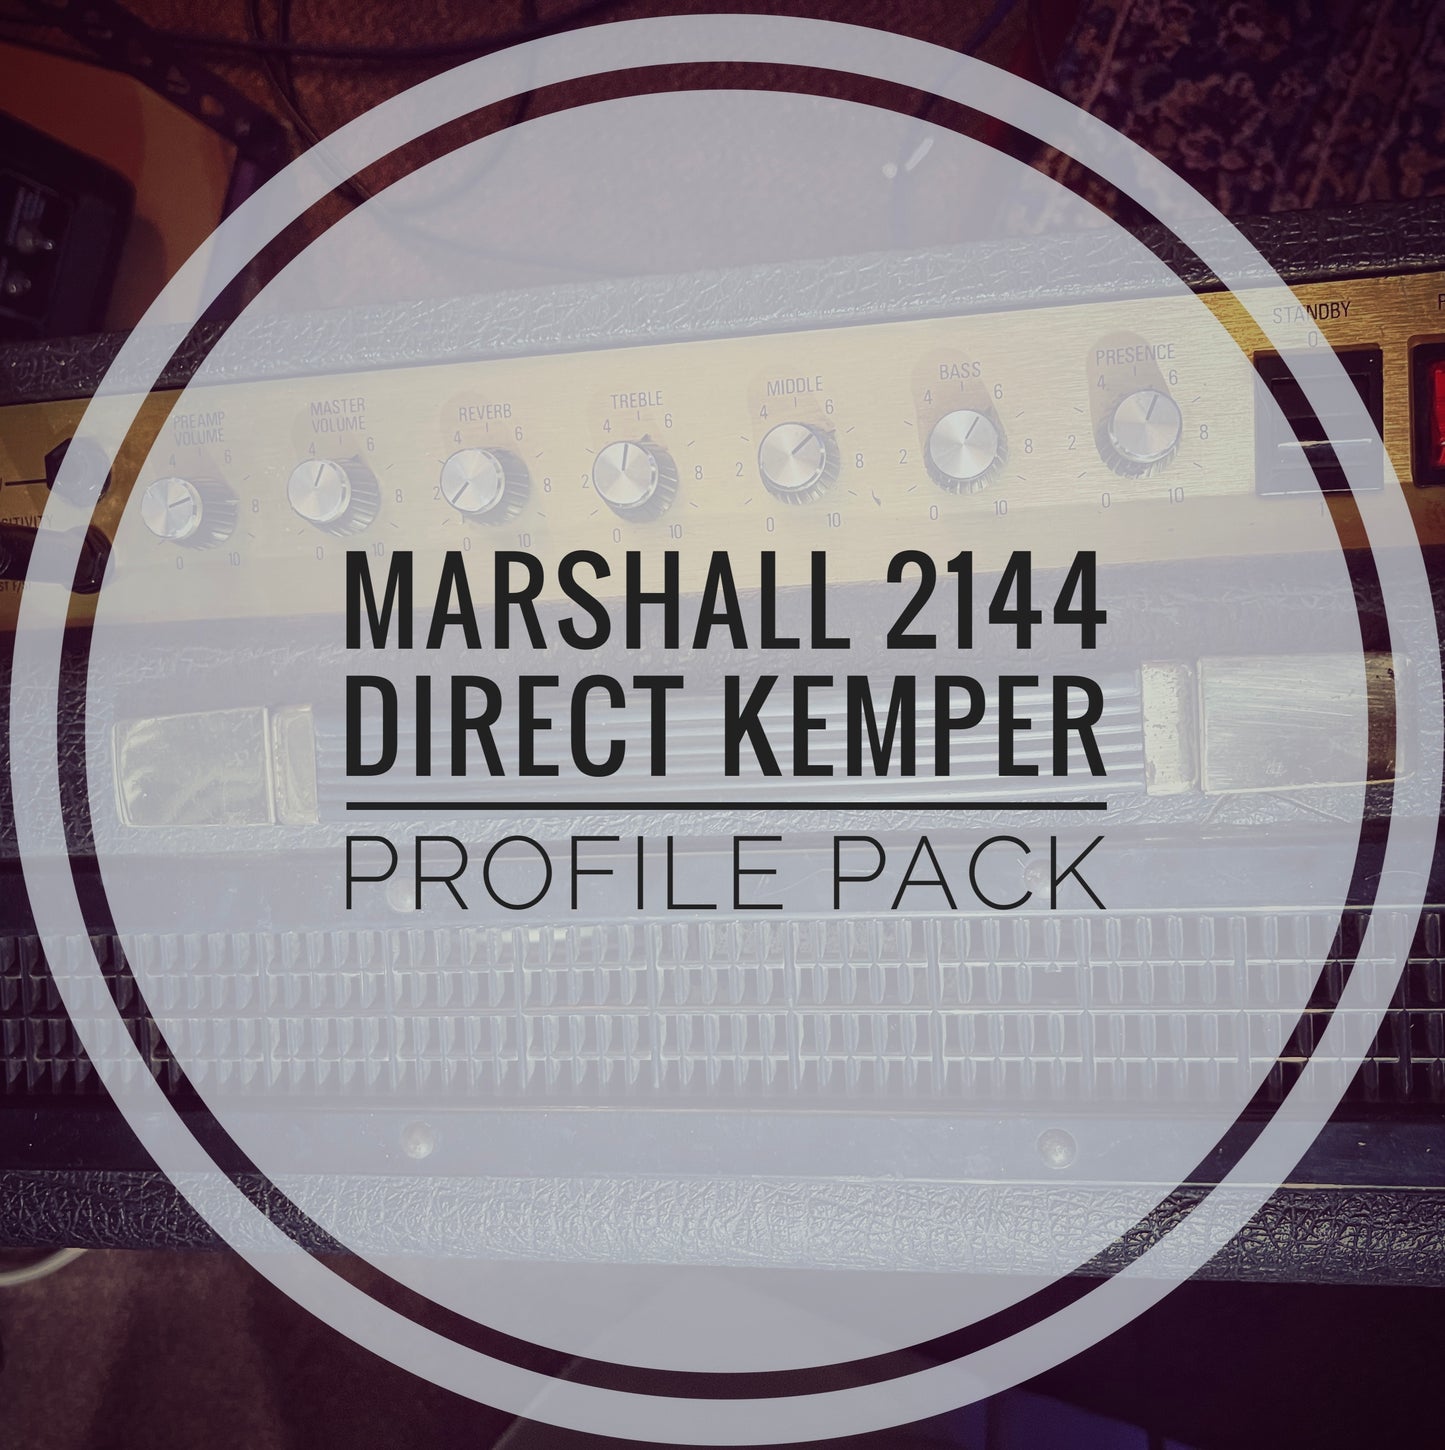 2144 - Kemper Profiles